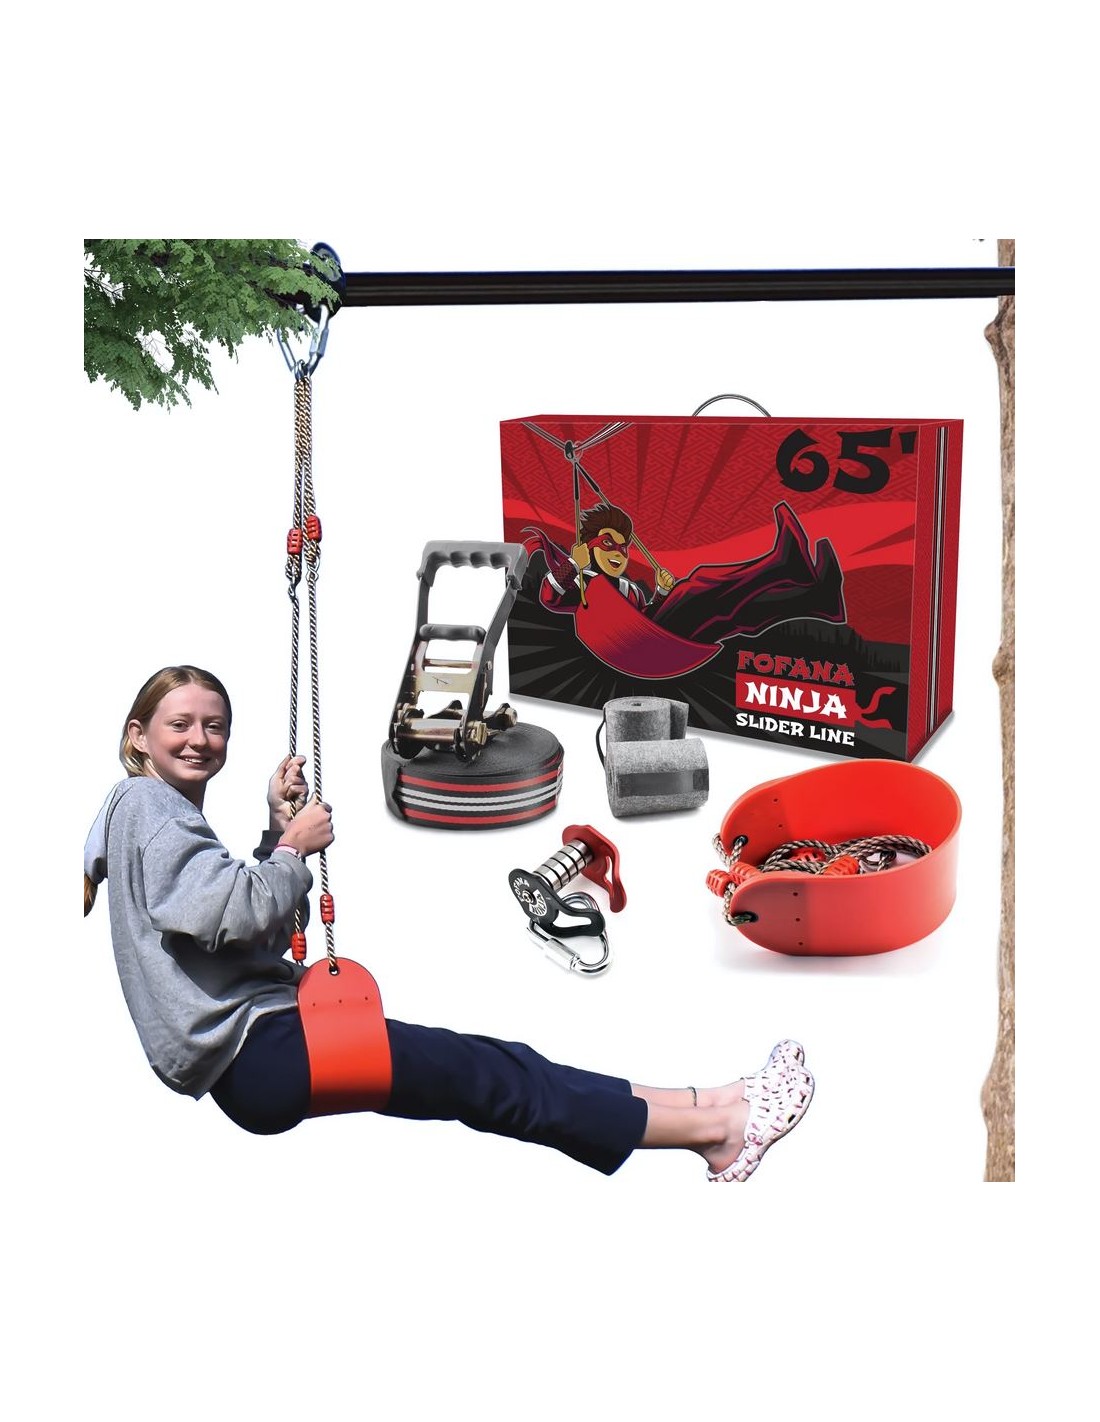 Fofana Ninja Slider Zipline Pulley Kit, 20 Meter von Fofana Ninja